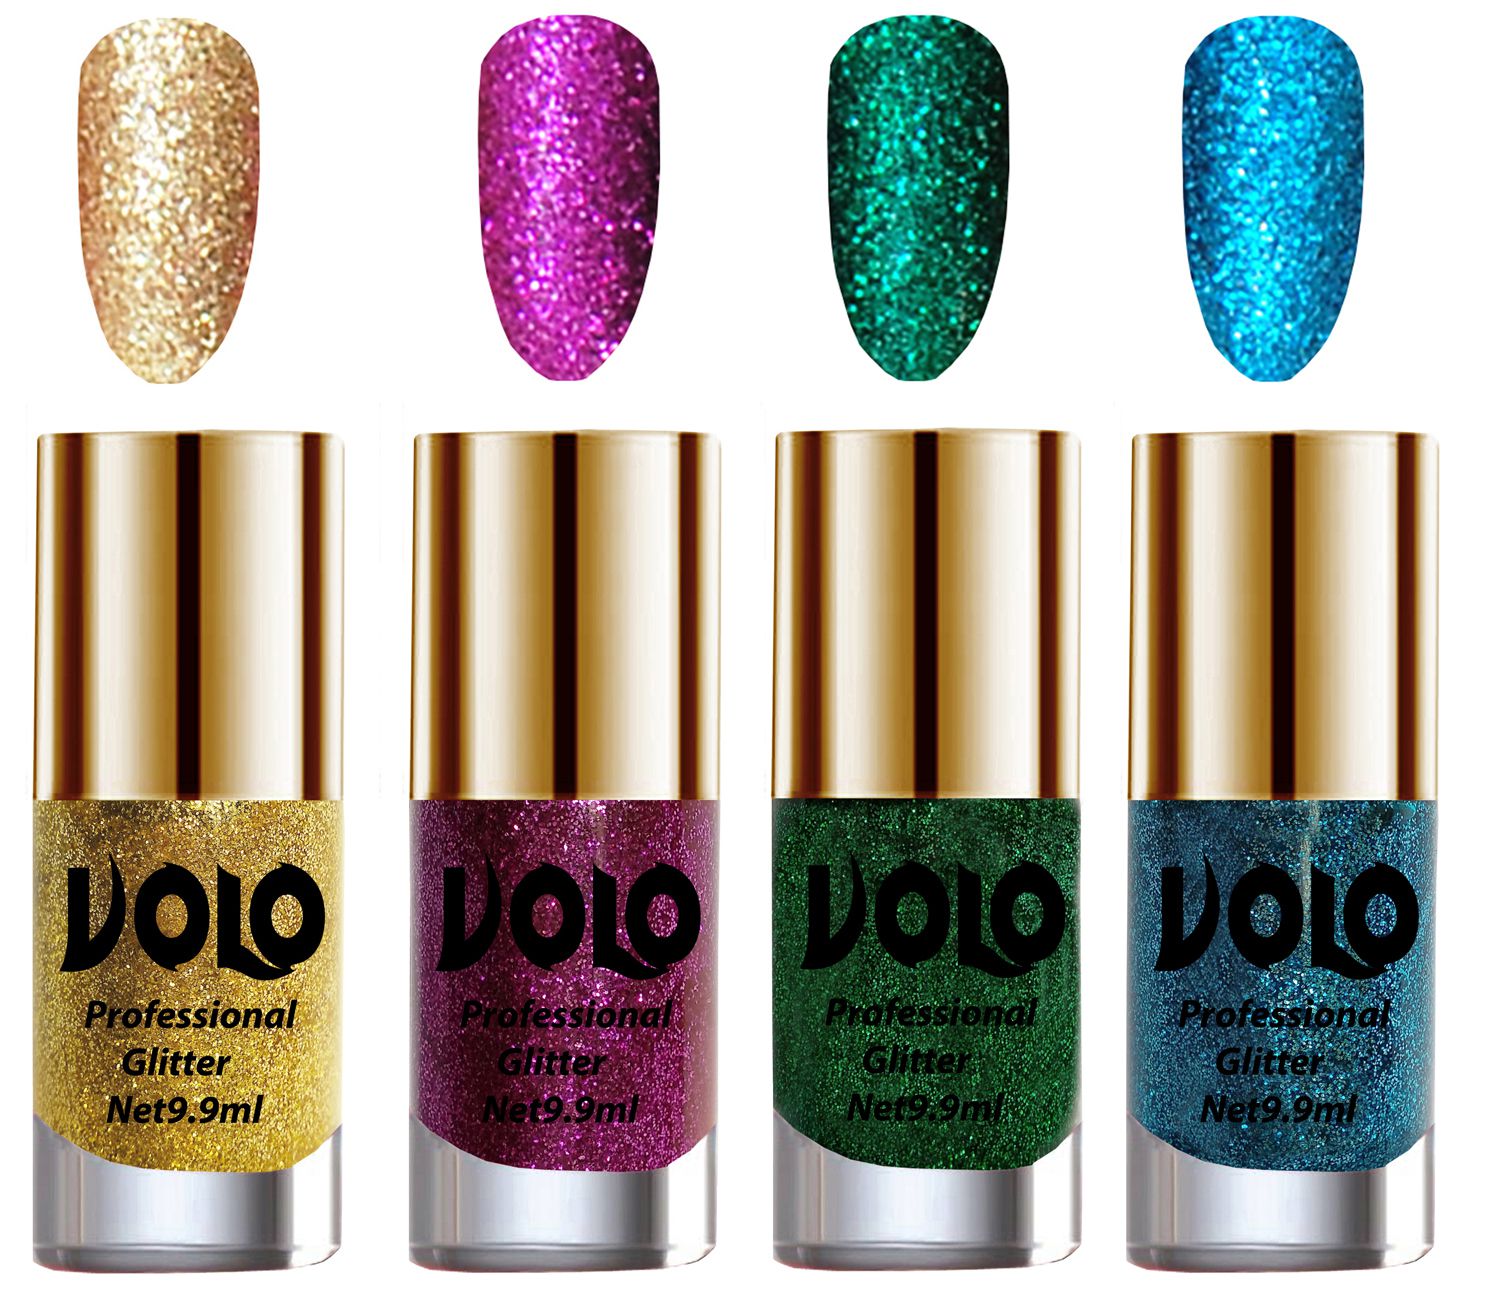     			VOLO Professionally Used Glitter Shine Nail Polish Gold,Purple,Green Blue Pack of 4 39 mL